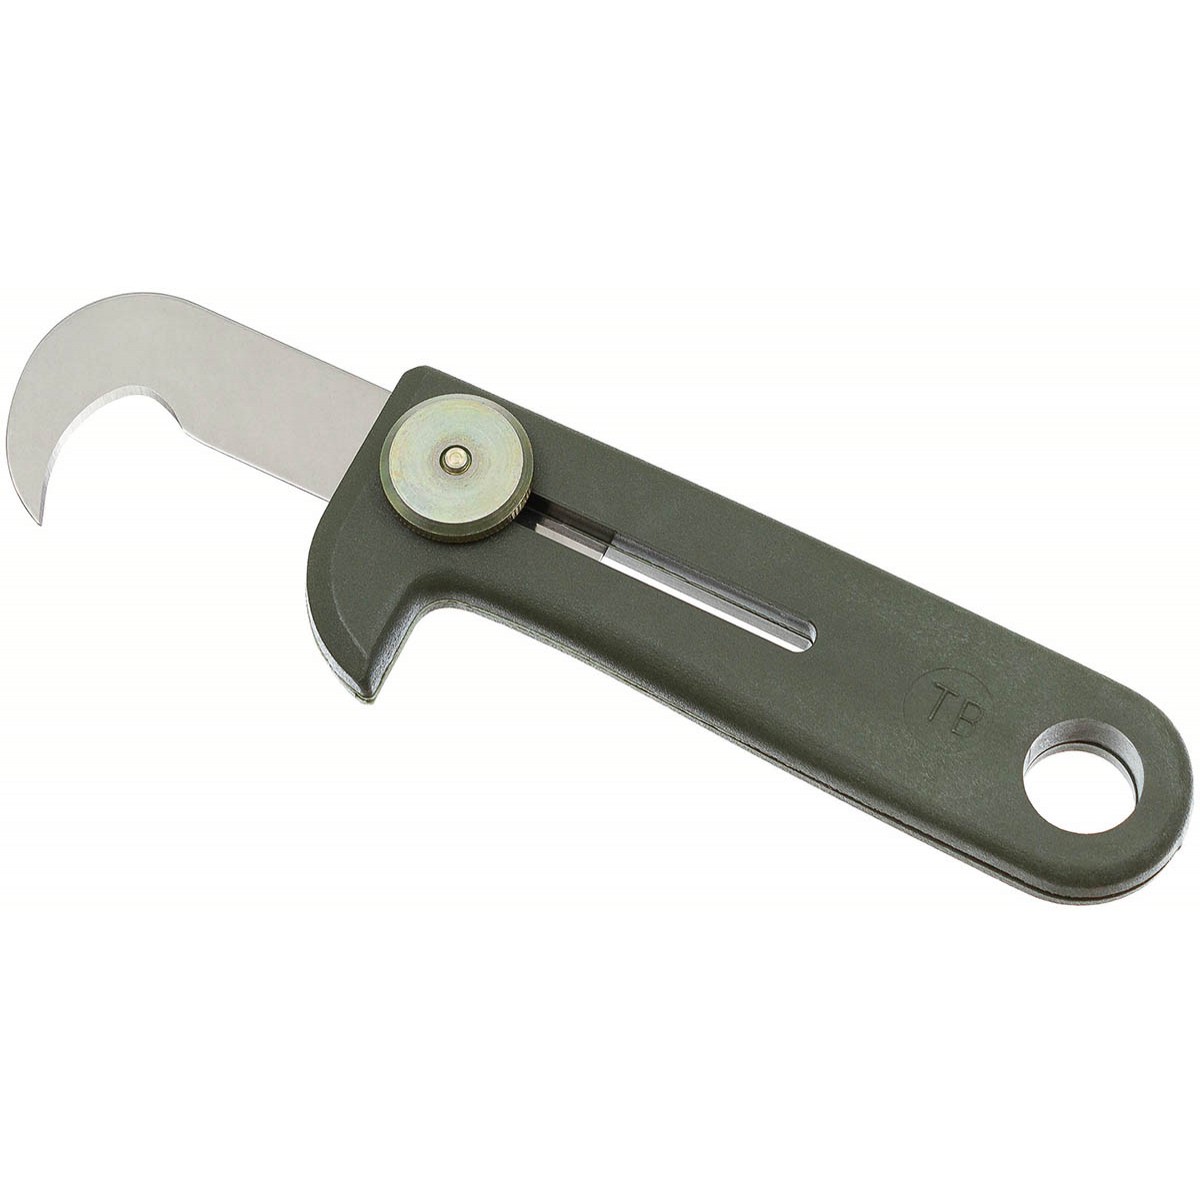 Koukkupuukko - Utility Knife OD green